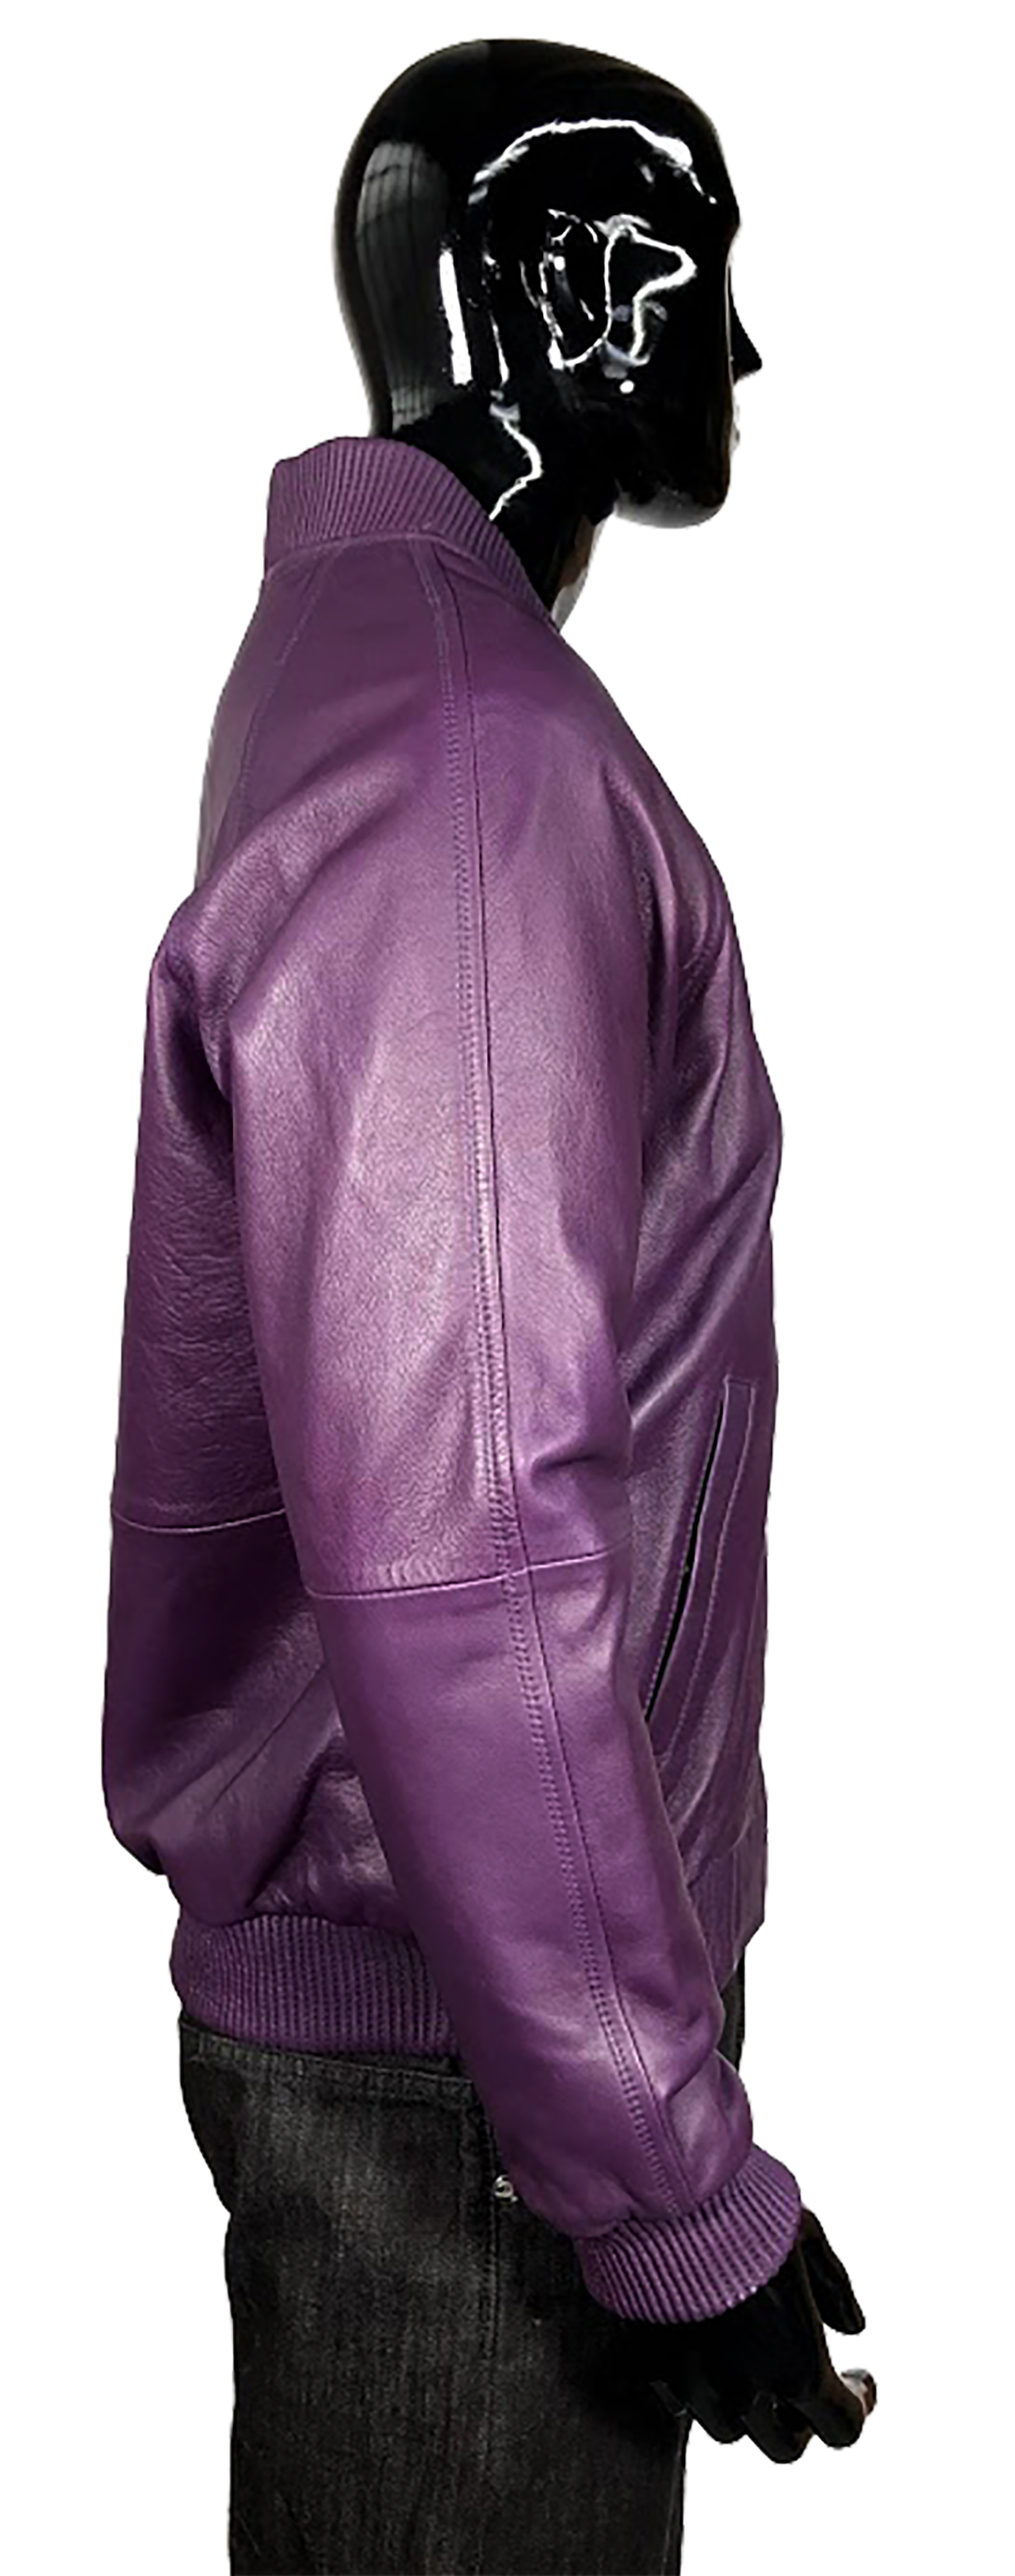 G-Gator Purple Genuine Lambskin Leather Baseball Varsity Bomber Jacket  1051. - $349.90 :: Upscale Menswear 